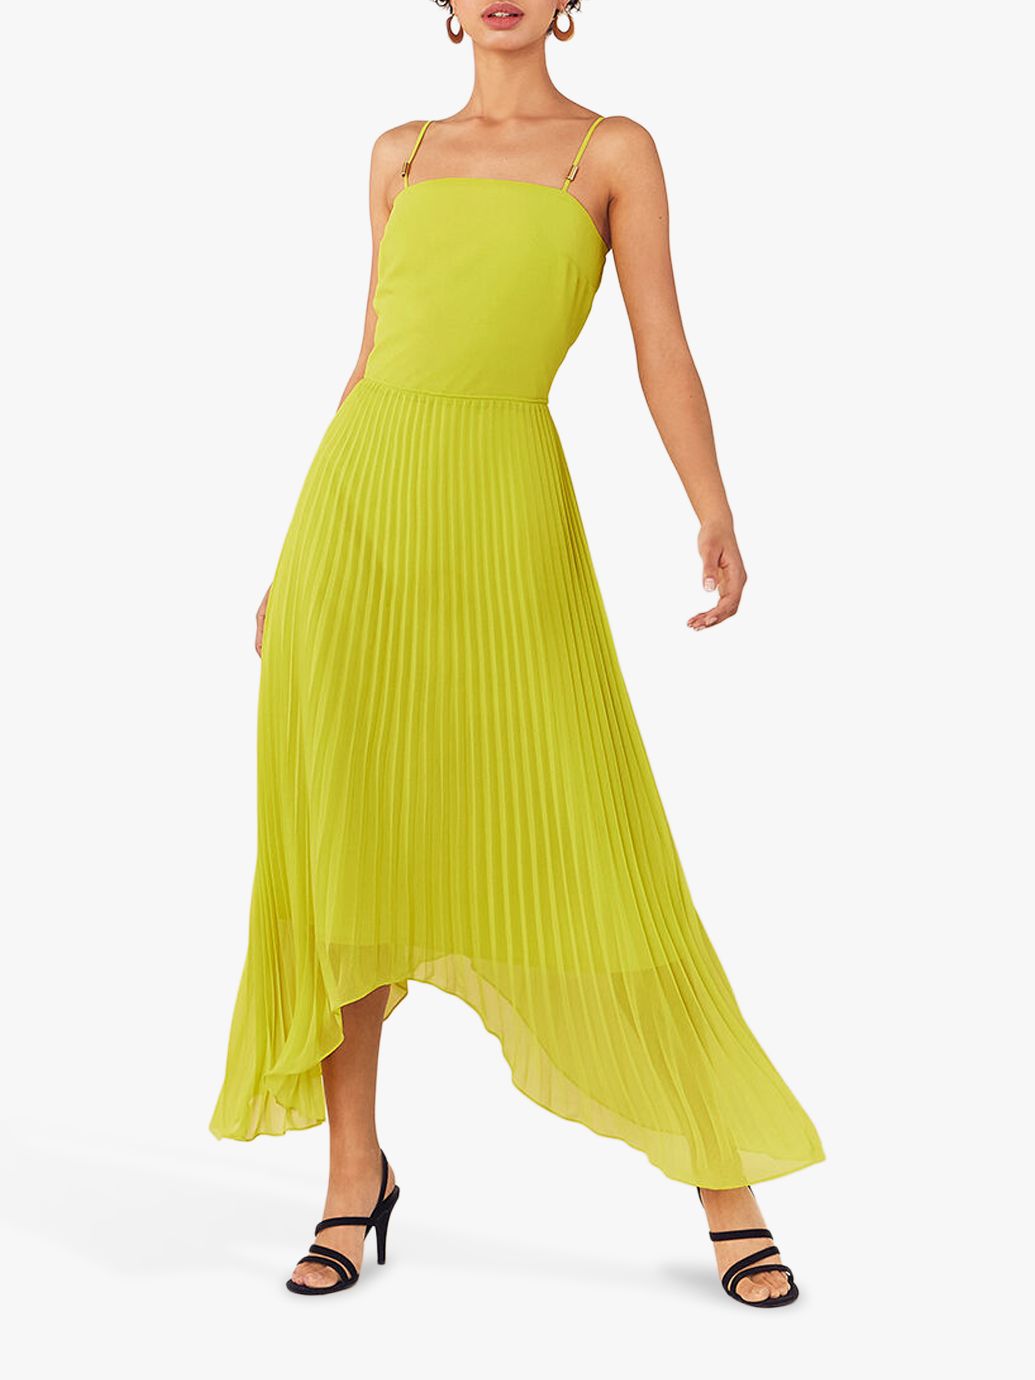 Oasis Pleat Asymmetric Dress, Lime Green